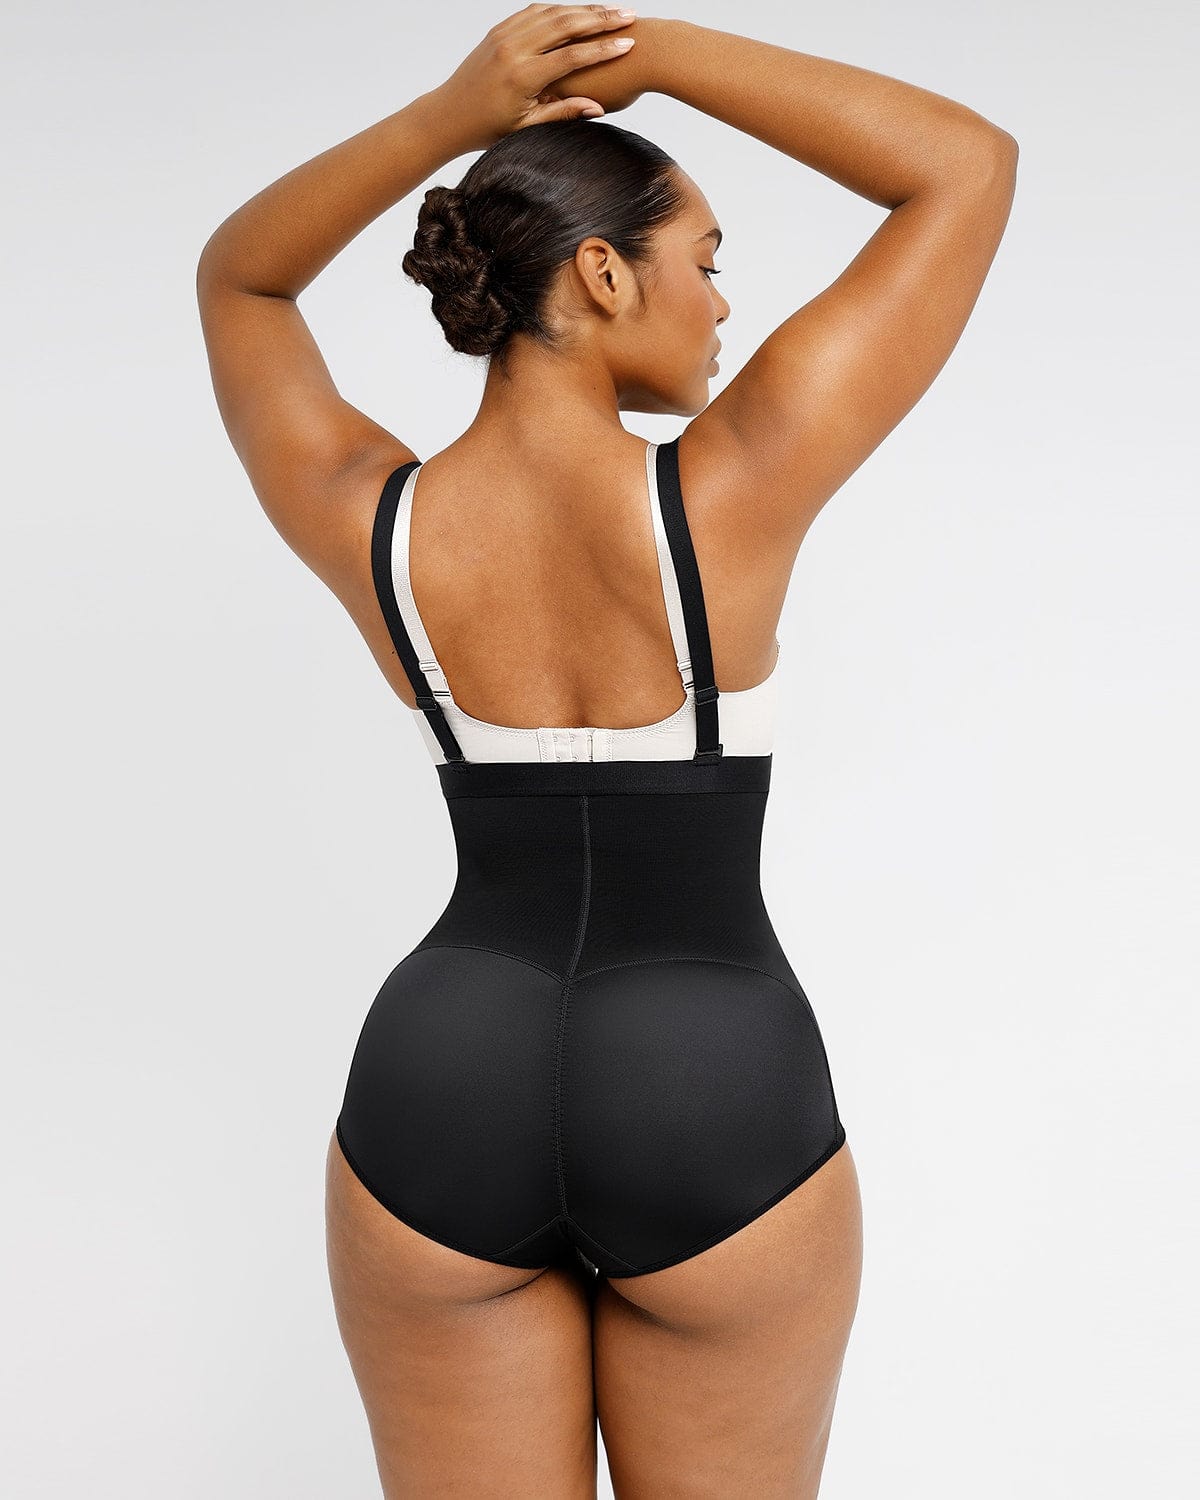 FarmaCell BodyShaper 603Y (Black, XL) Shapewear Shorts for Women, Slimming  Pants Tummy Control, Anti Cellulite, High Waisted 